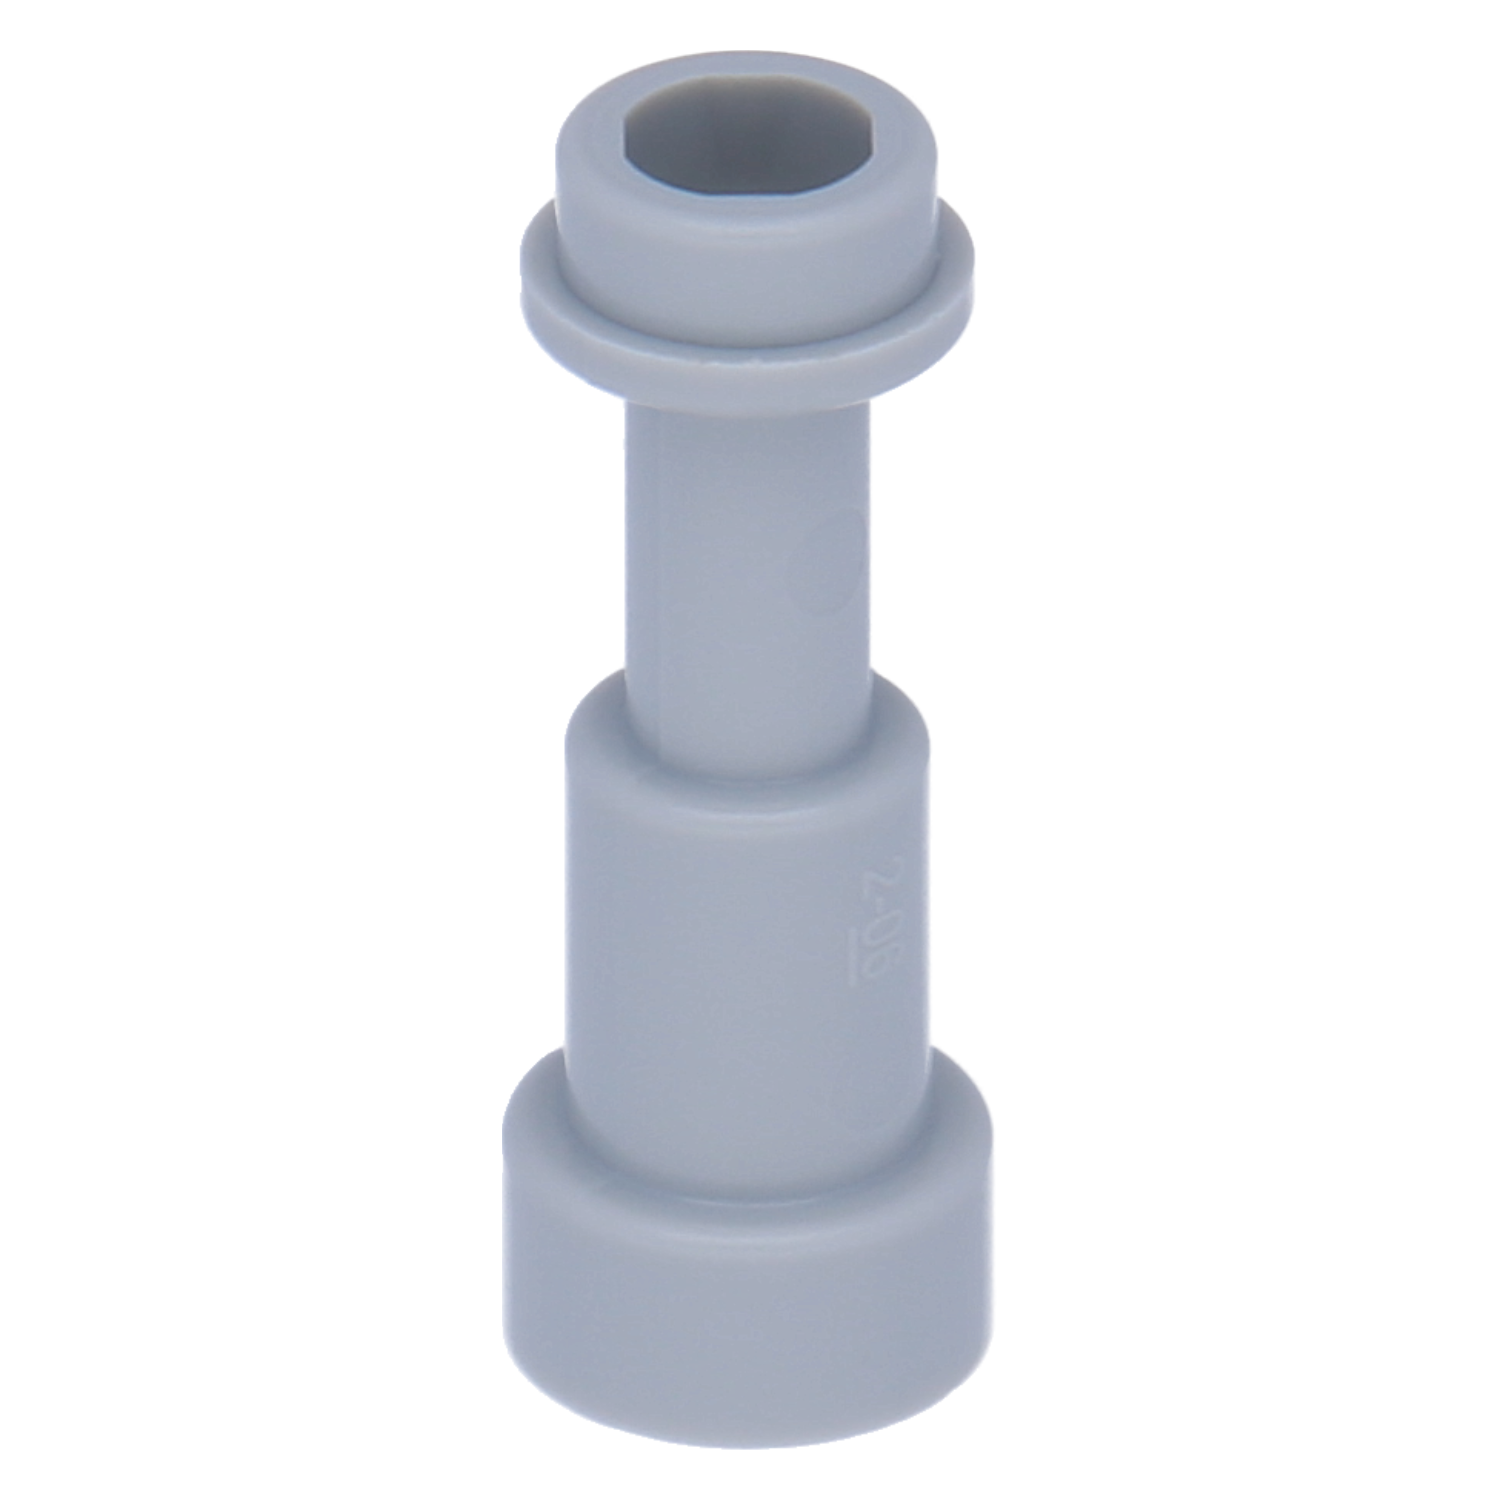 LEGO Minifigure Accessories (tools) - Telescope